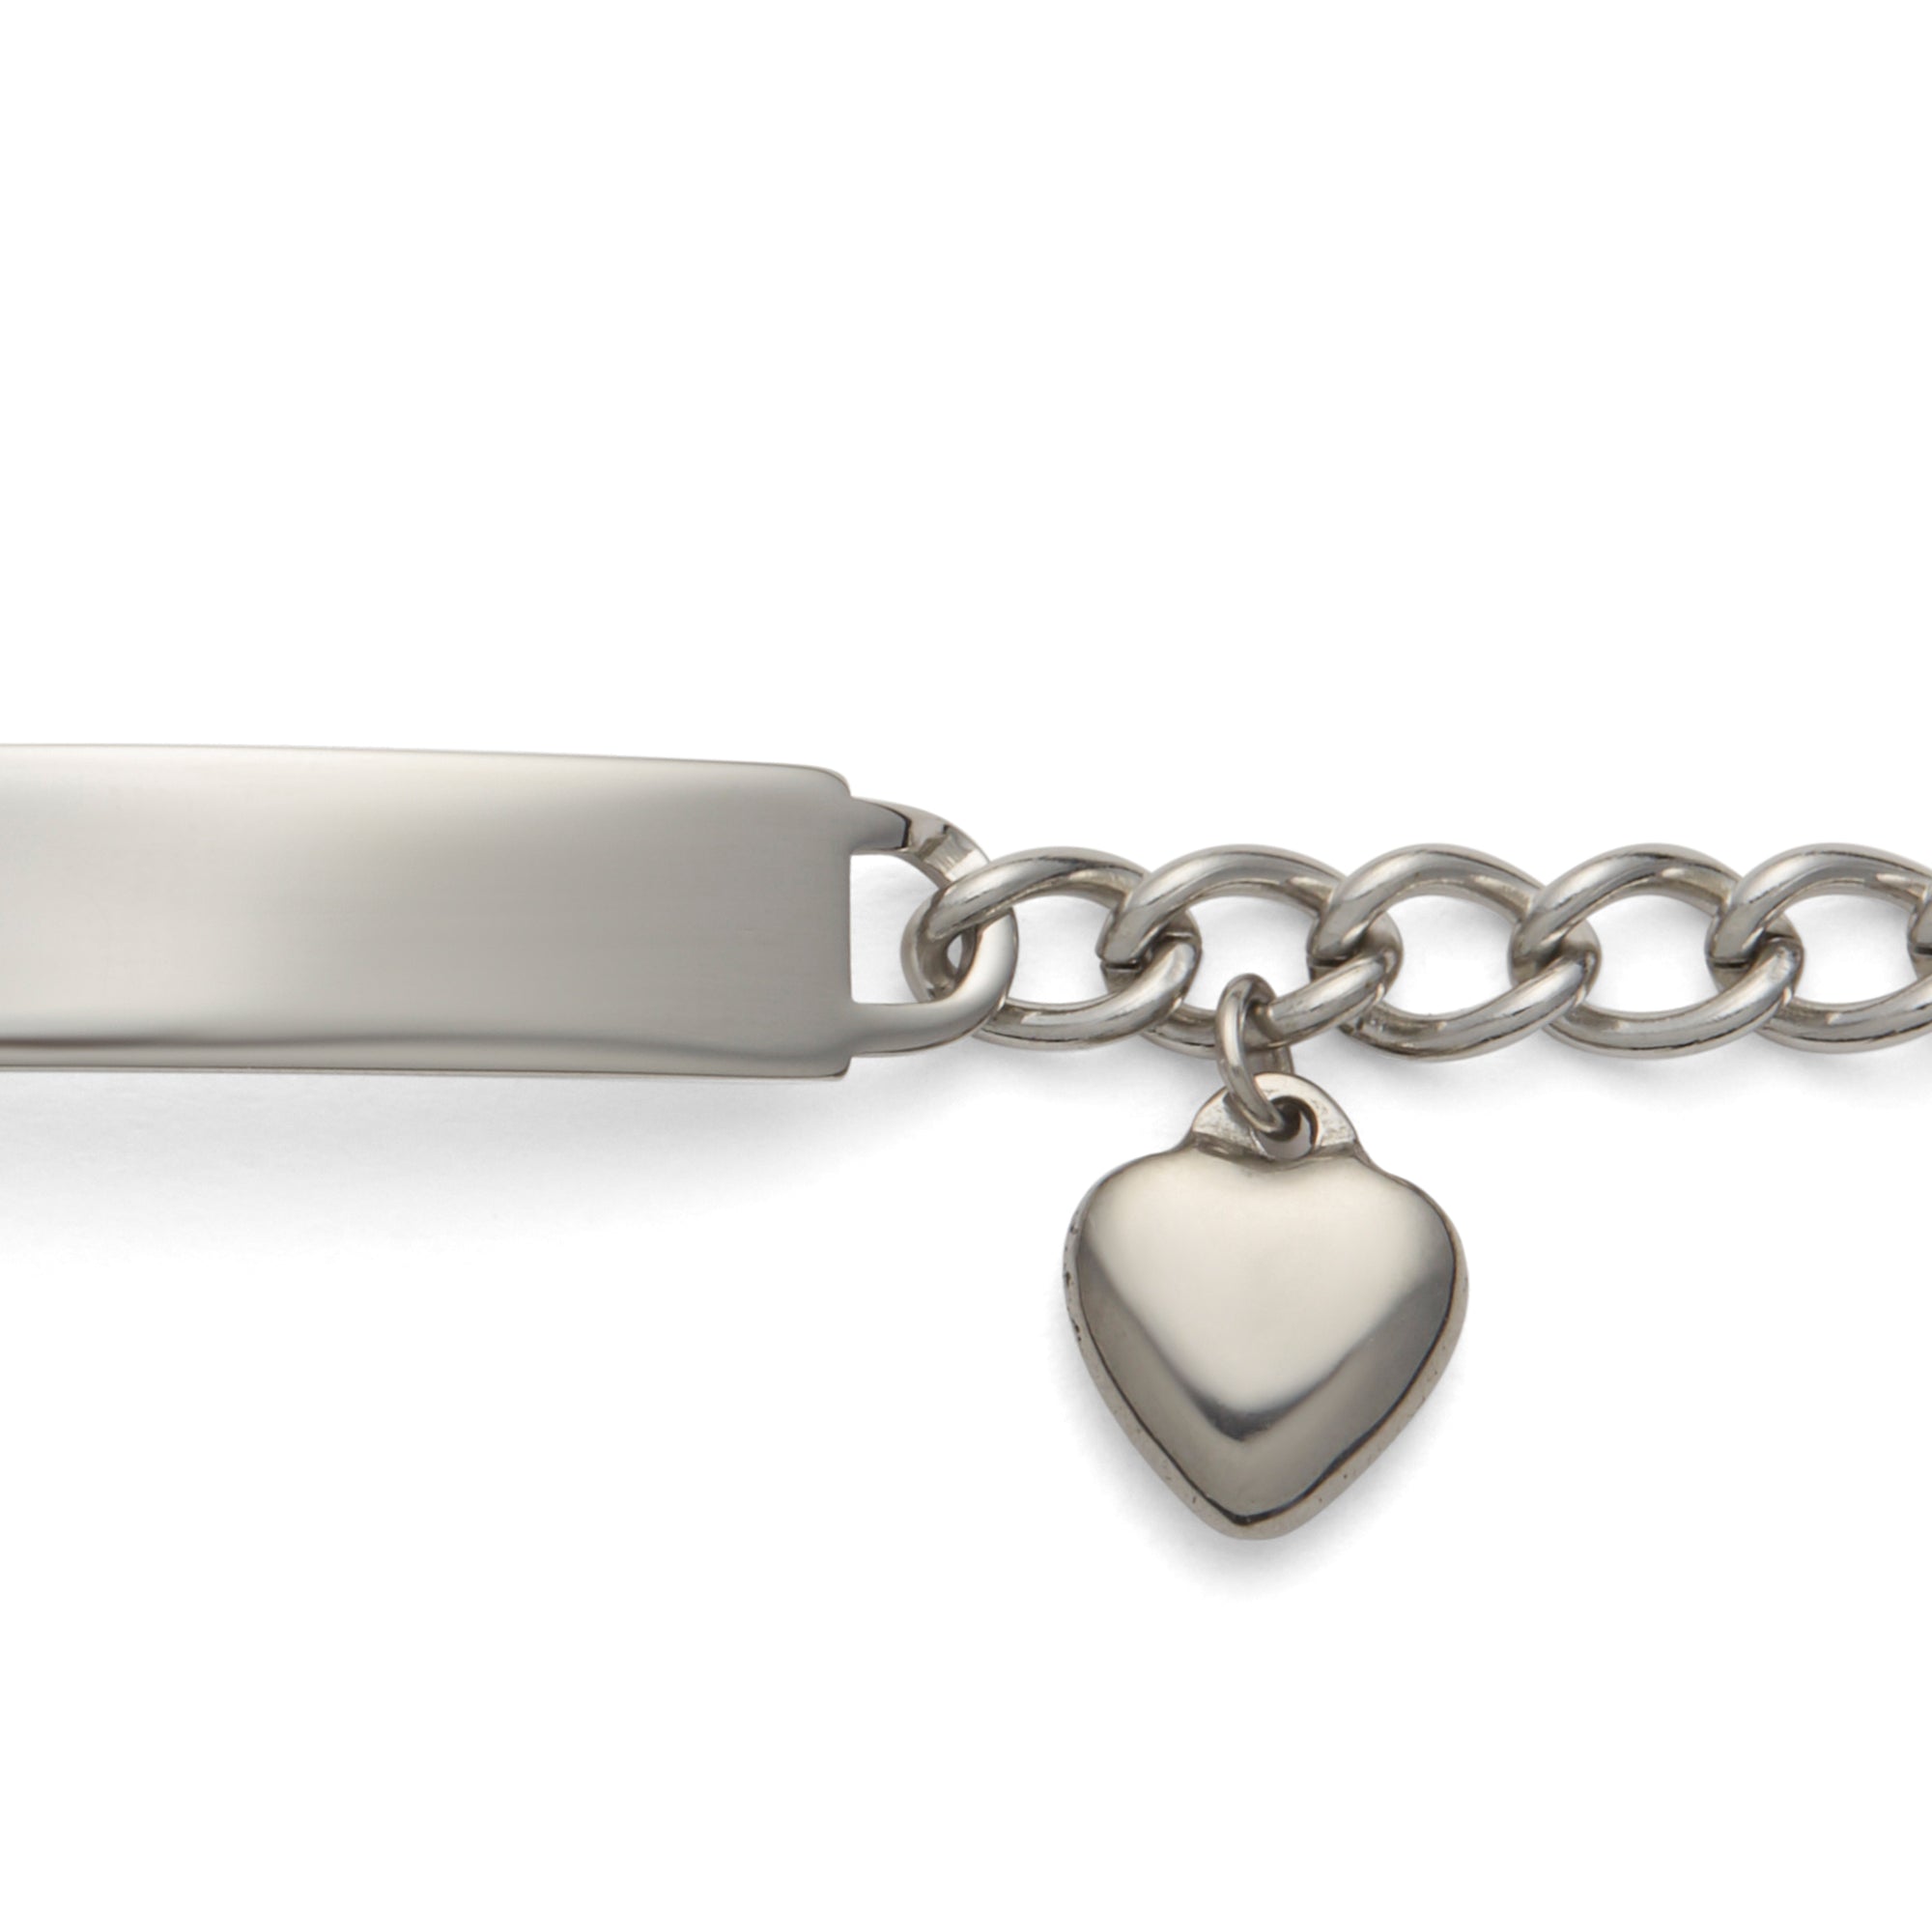 Engraved Kid's ID Charm Bracelet with Heart Locket